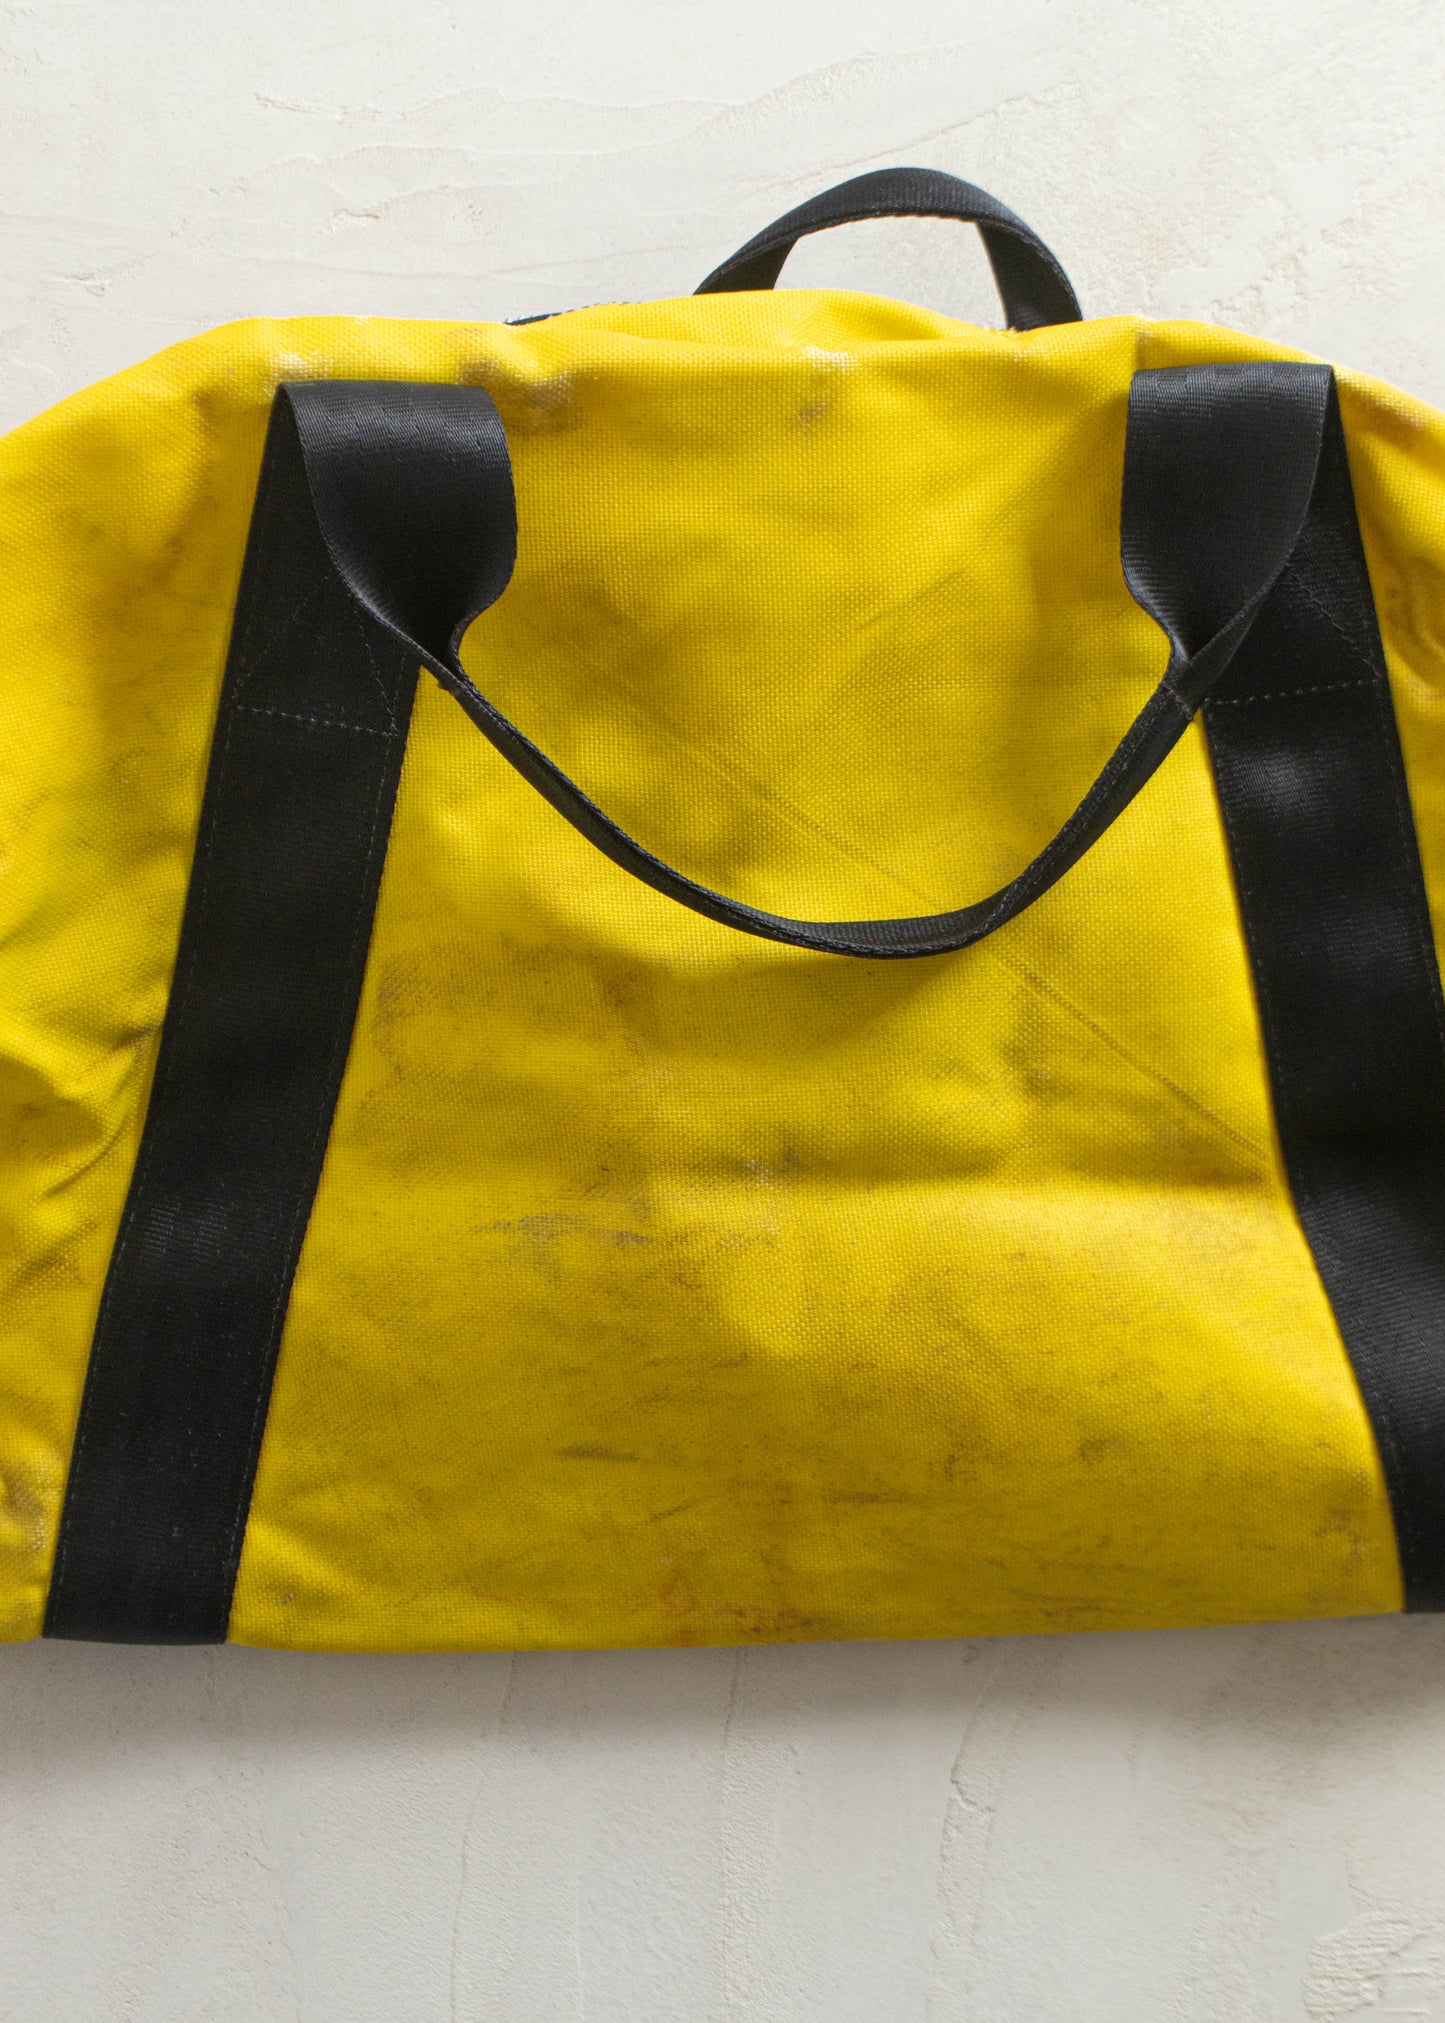 Vintage 1990s Hydro Quebec Duffle Bag